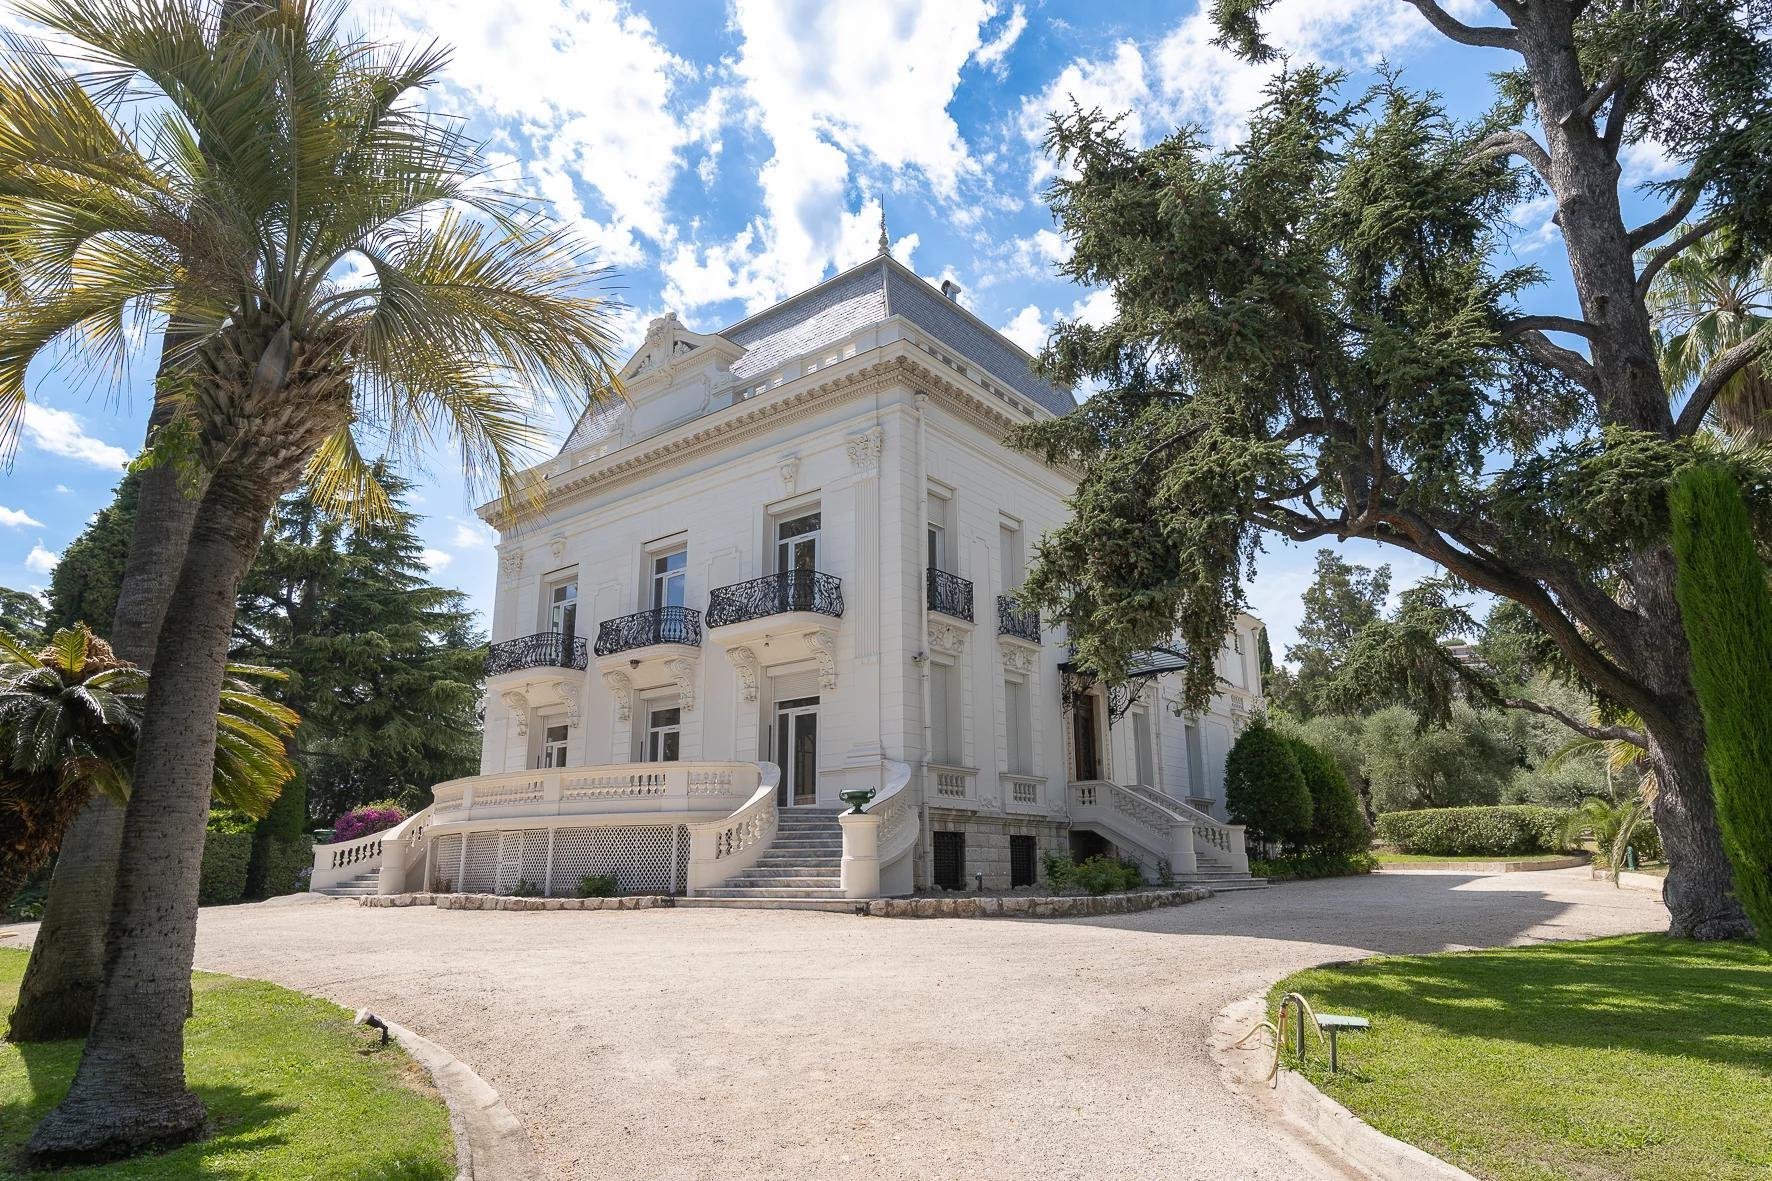 Francis York Belle Epoque Mansion For Sale in Nice, France 4.jpg